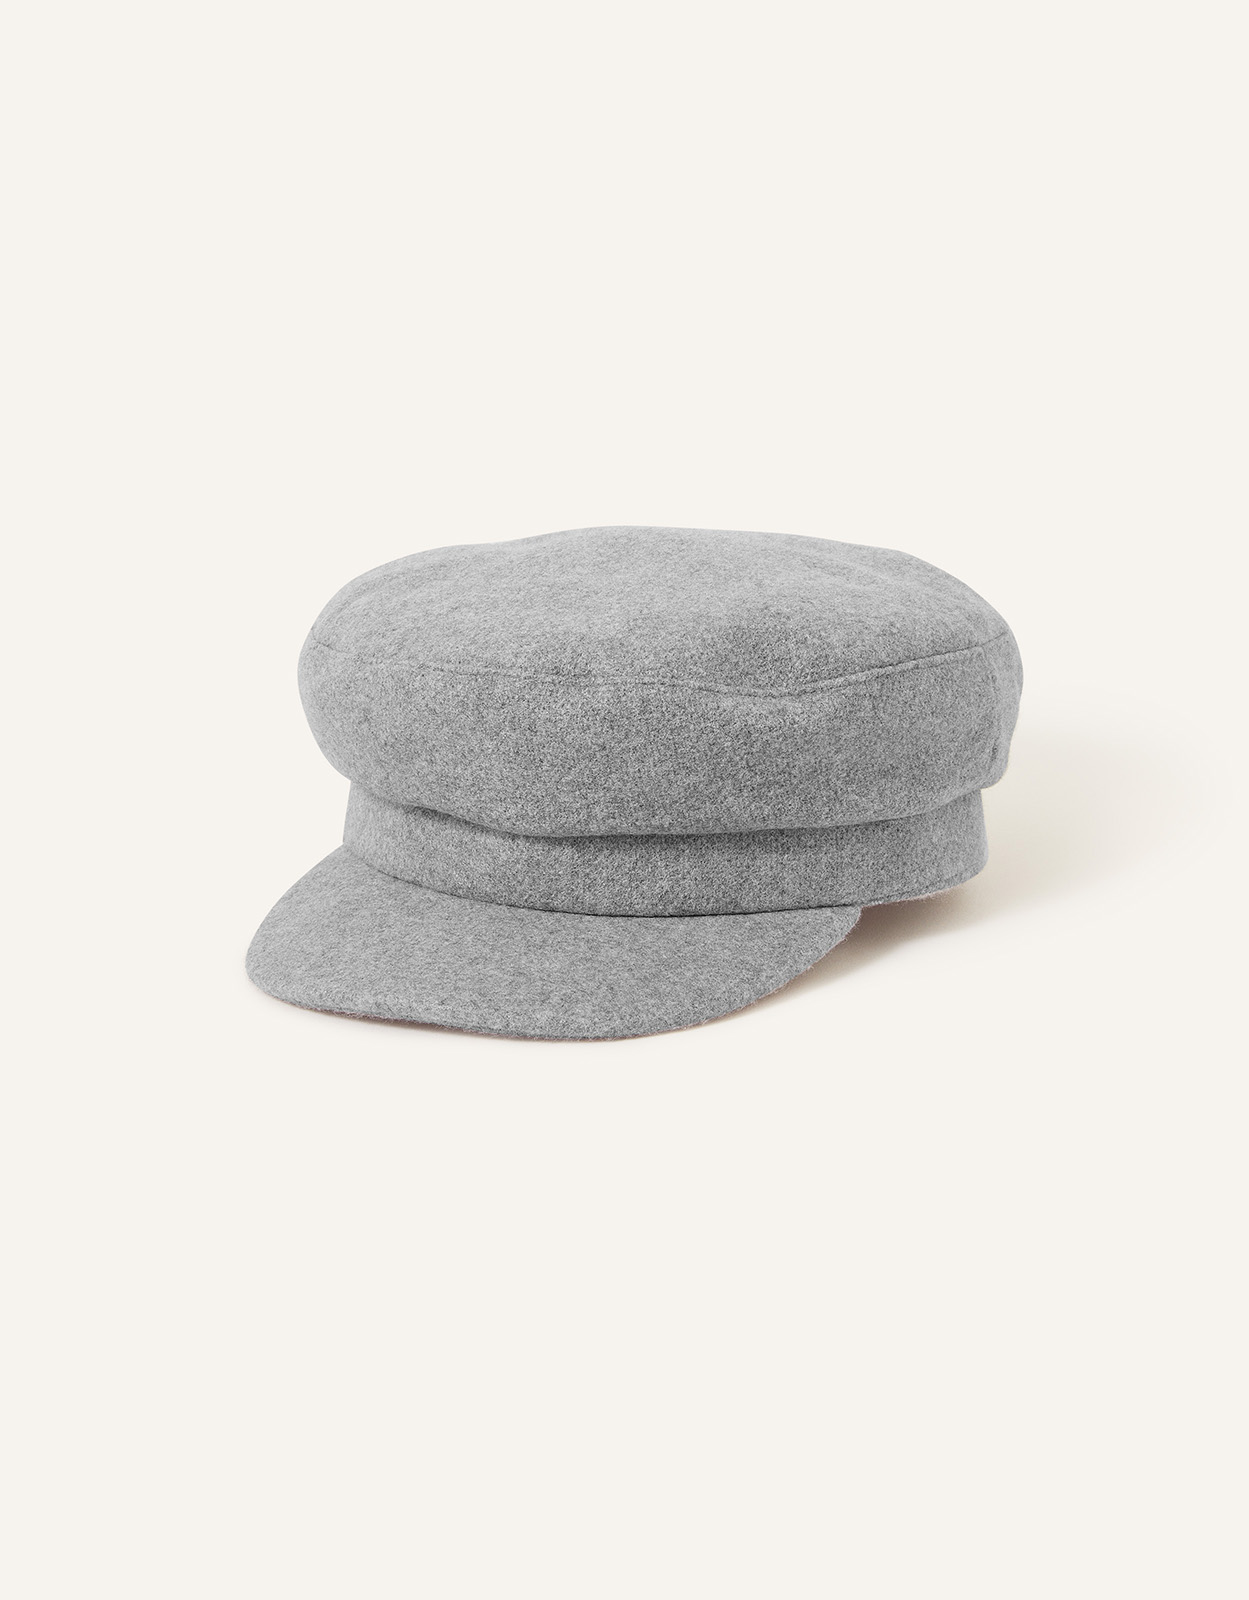 Accessorize Women's Soft Textured Baker Boy Hat